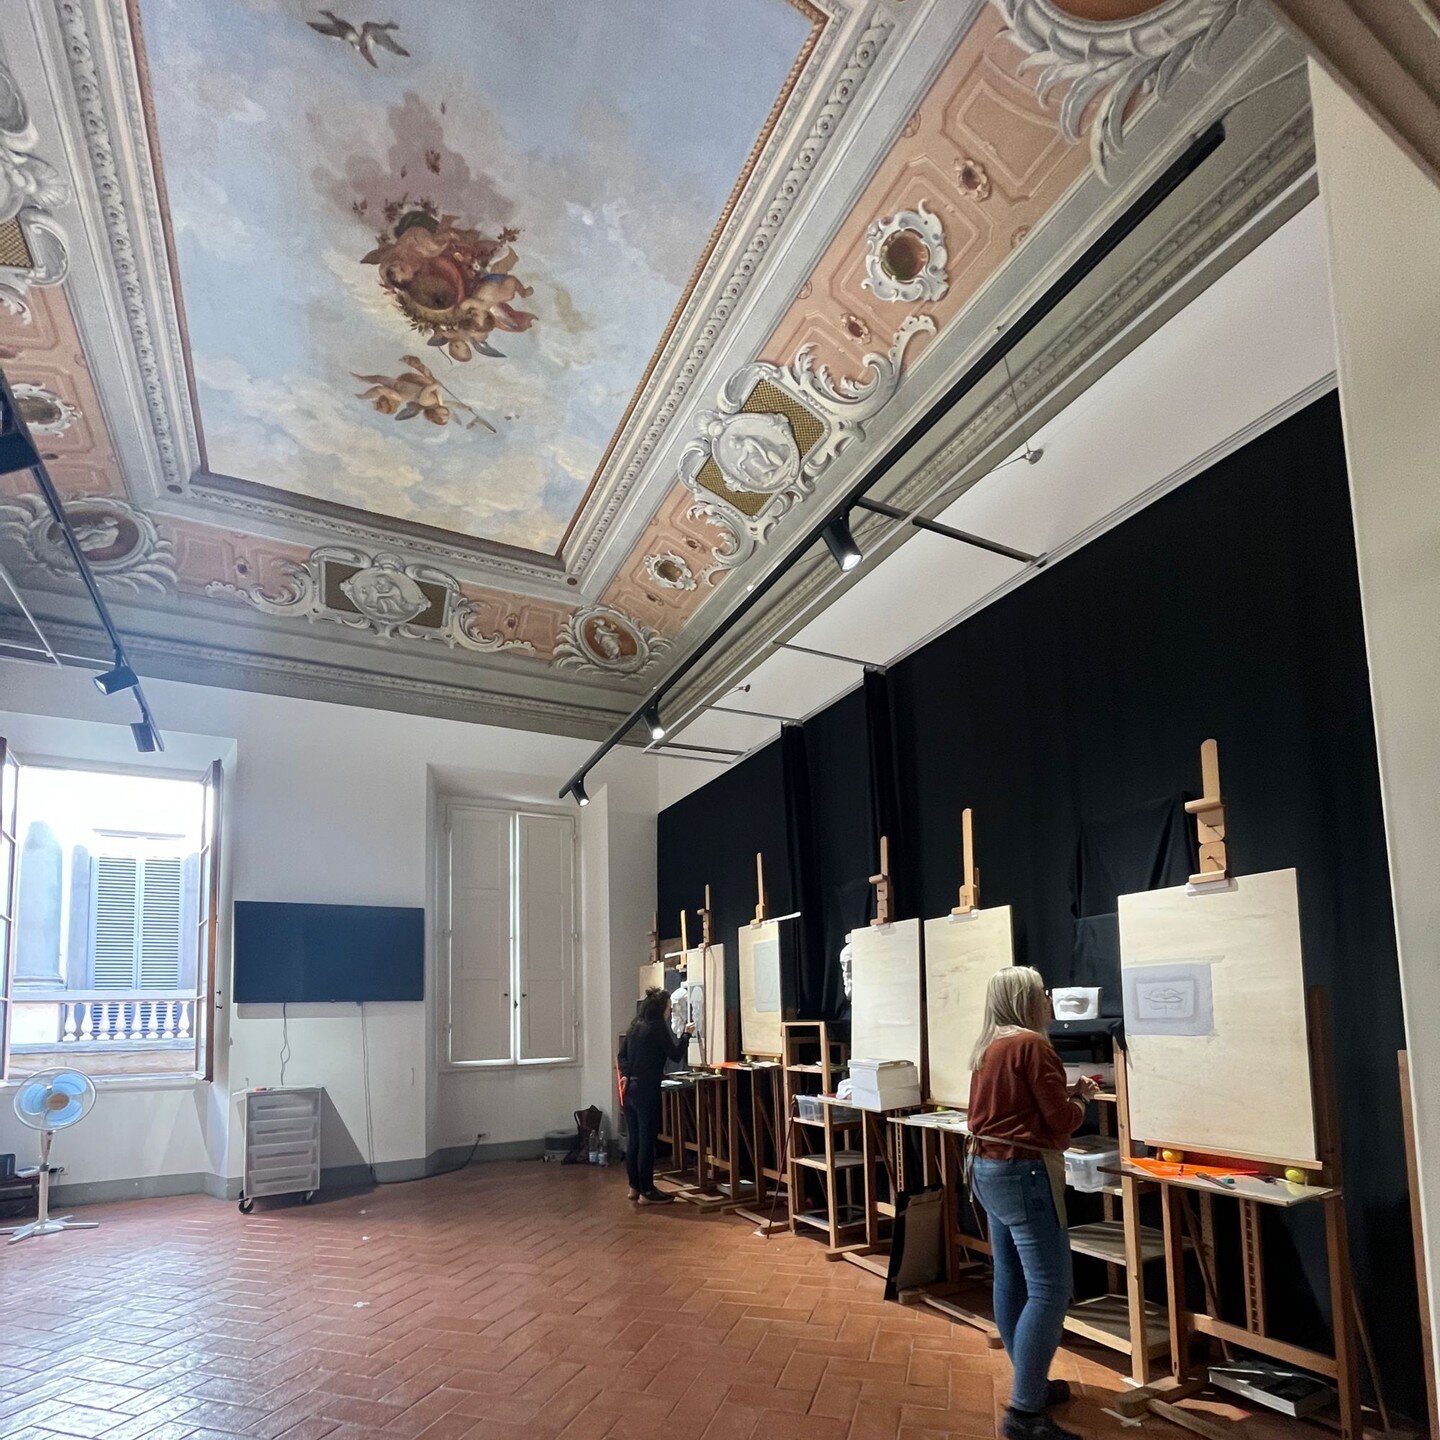 The Florence art studio